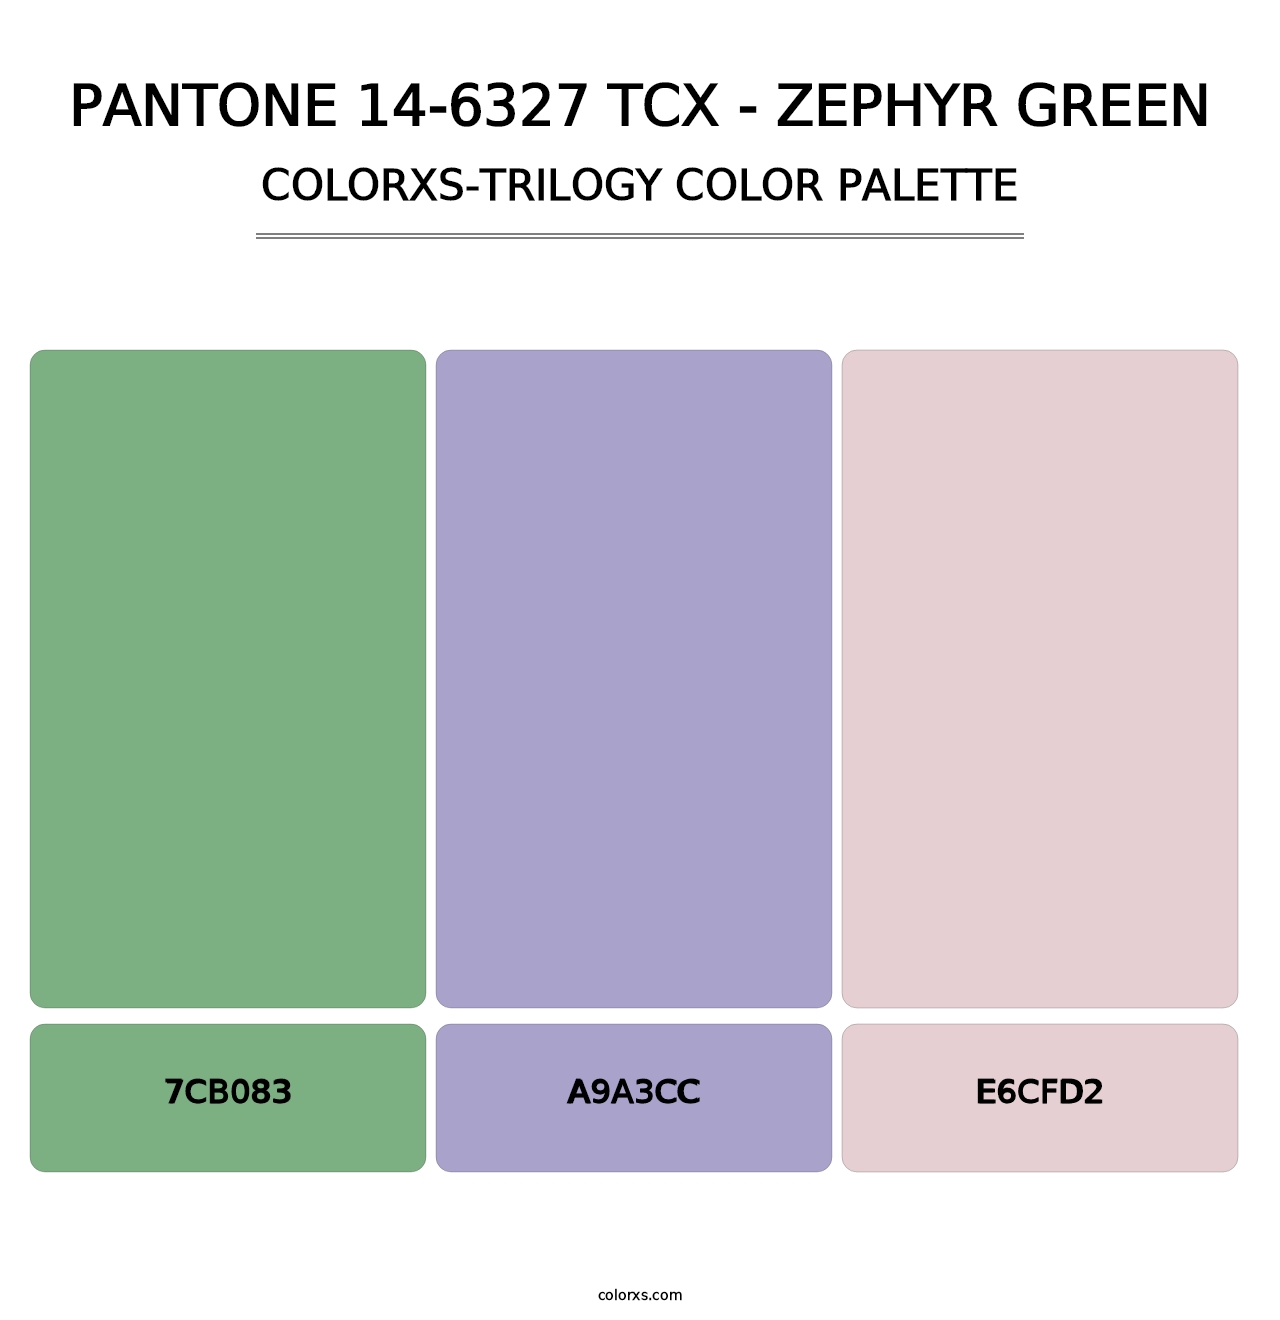 PANTONE 14-6327 TCX - Zephyr Green - Colorxs Trilogy Palette